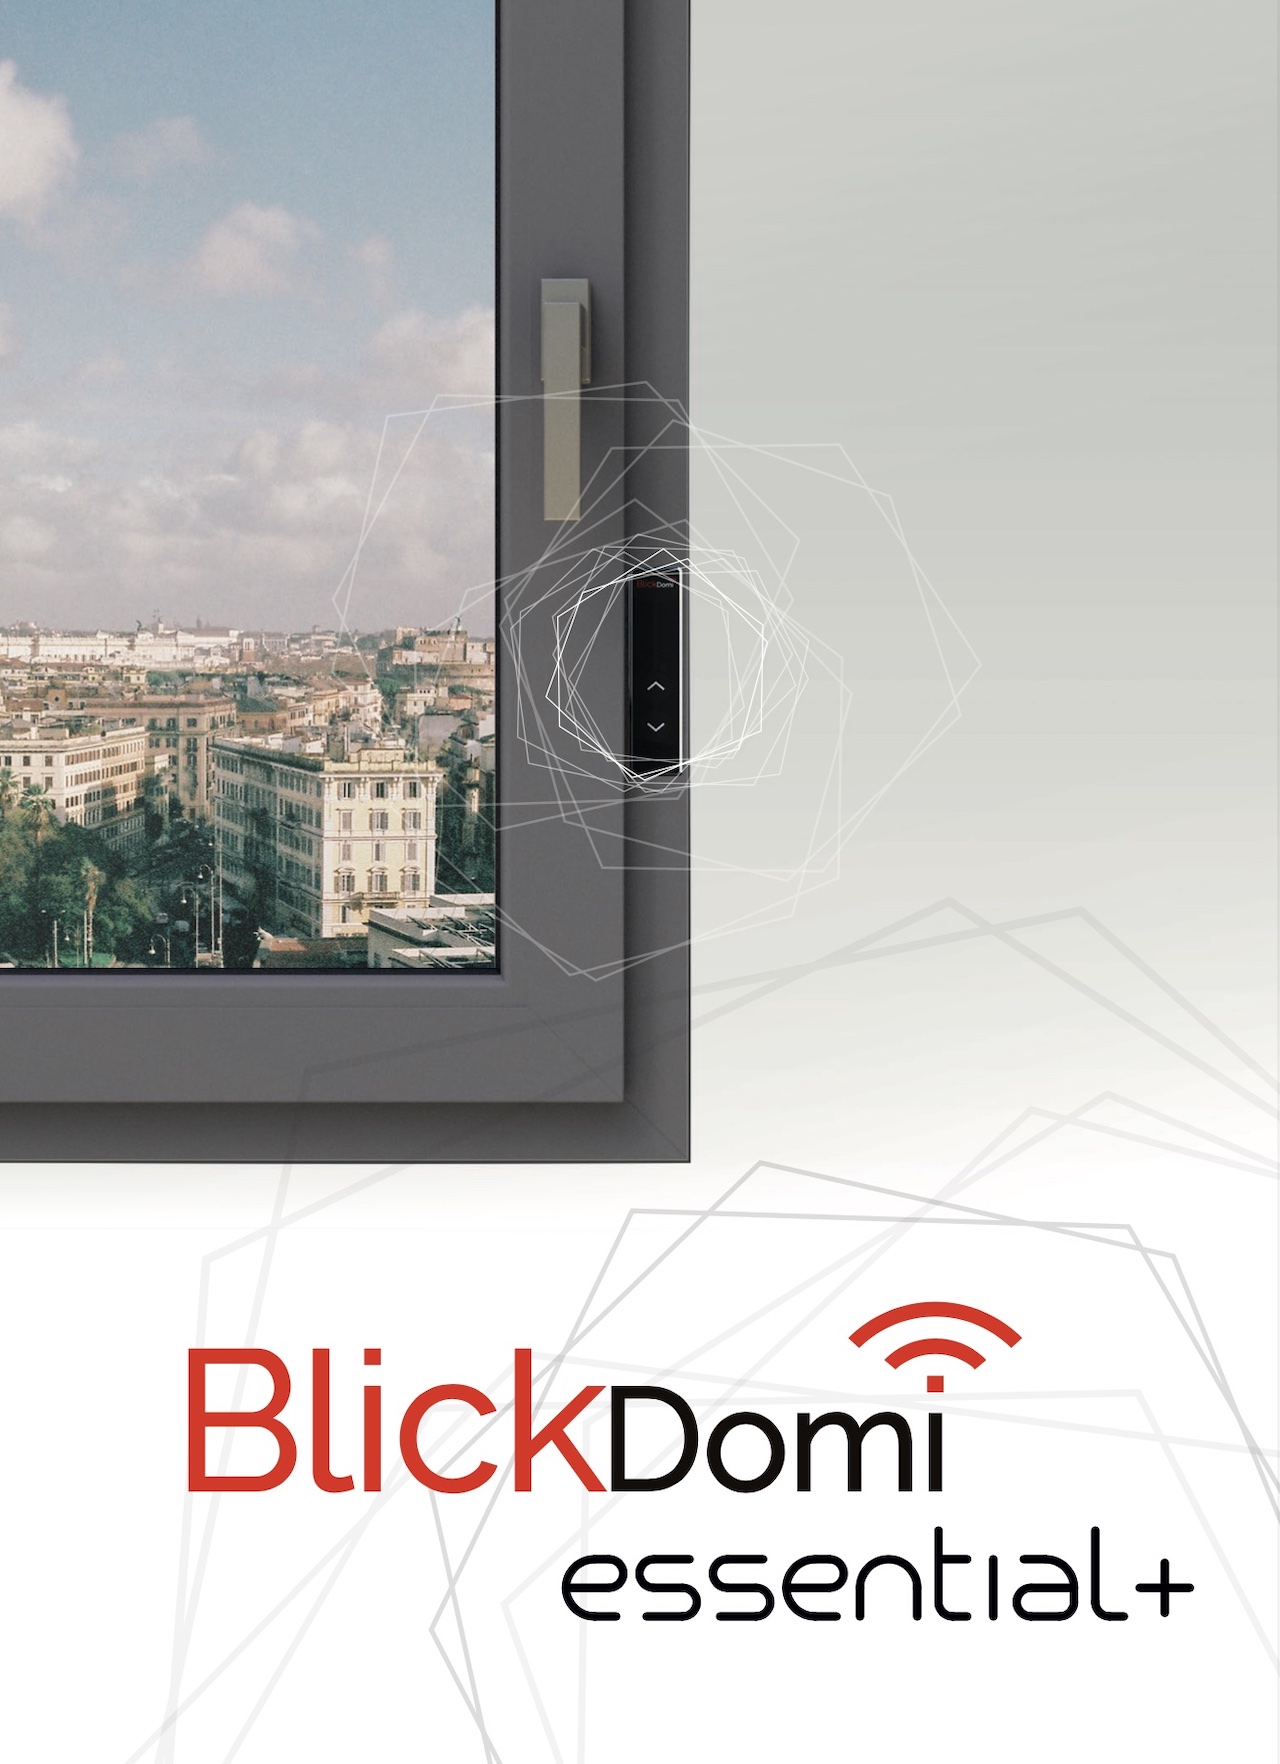 Imagen ventana con sistema BlickDomi